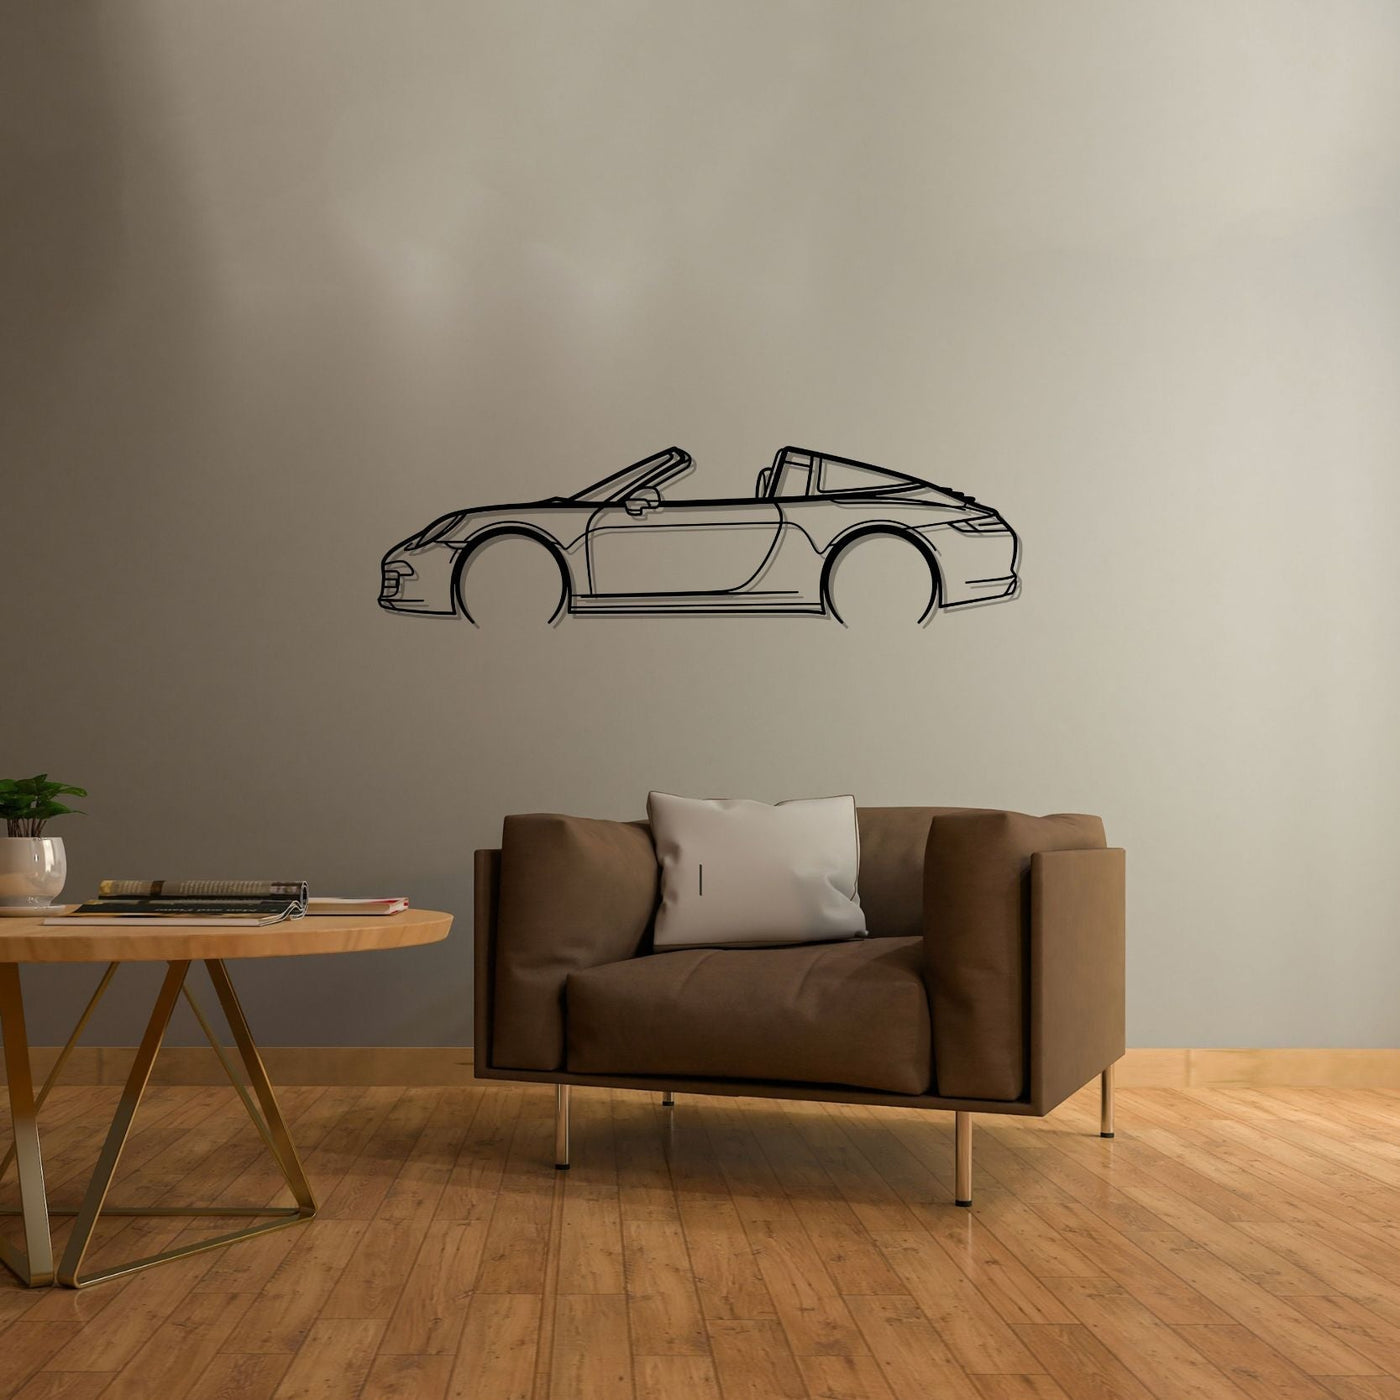 911 Targa model 991 Detailed Silhouette Metal Wall Art